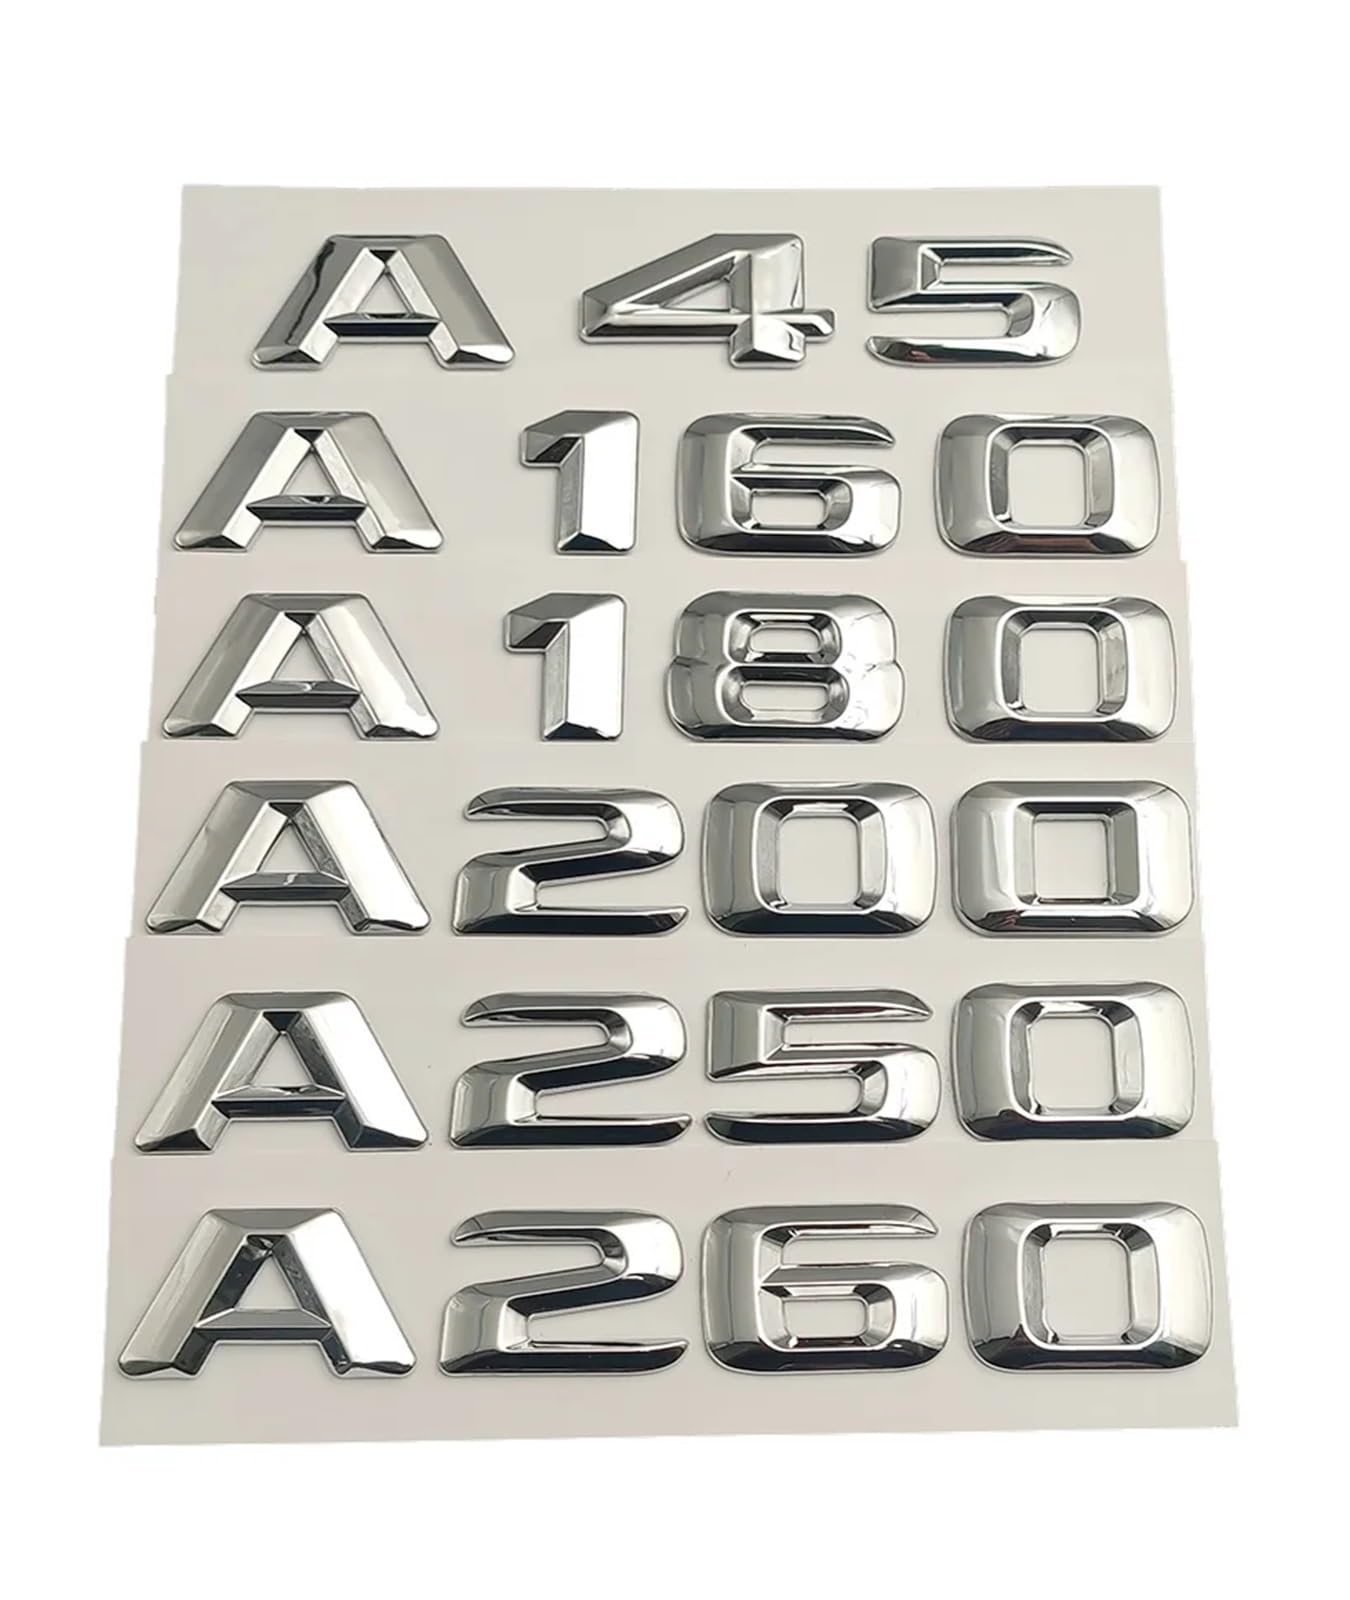 AQXYWQOL 3D ABS schwarze Autobuchstaben kompatibel mit A45 A160 A180 A200 A250 A260 W176 W177 Emblem Abzeichen Logo Aufkleber Kofferraumzubehör Farbe ist konstant, verblasst nicht und beschädigt(Chrom von AQXYWQOL